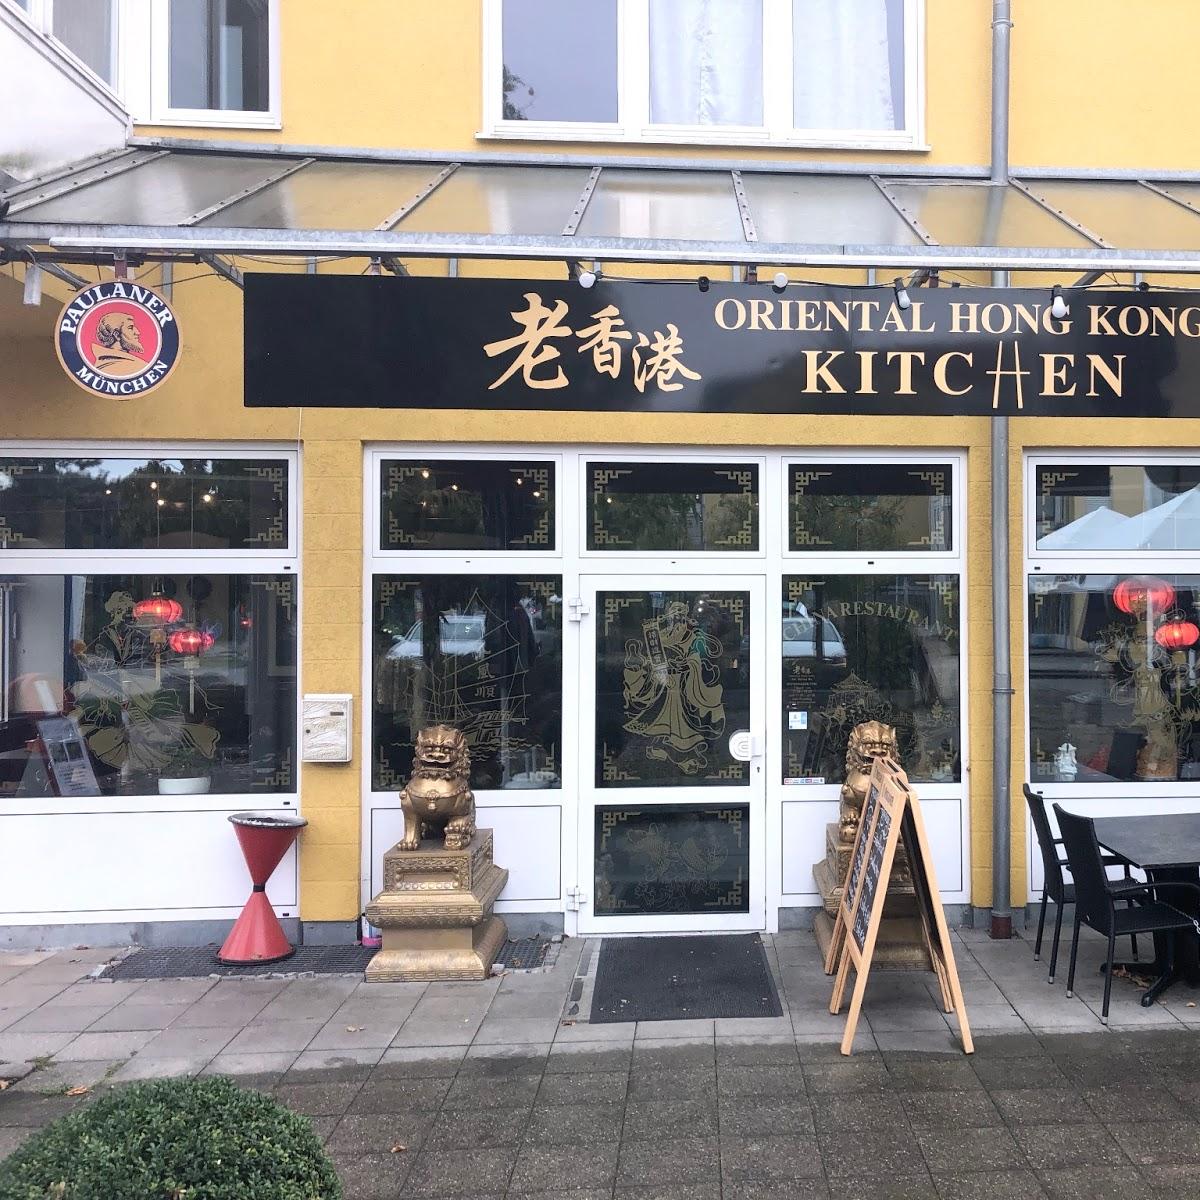 Restaurant "Oriental Hong Kong Kitchen" in Karlsfeld